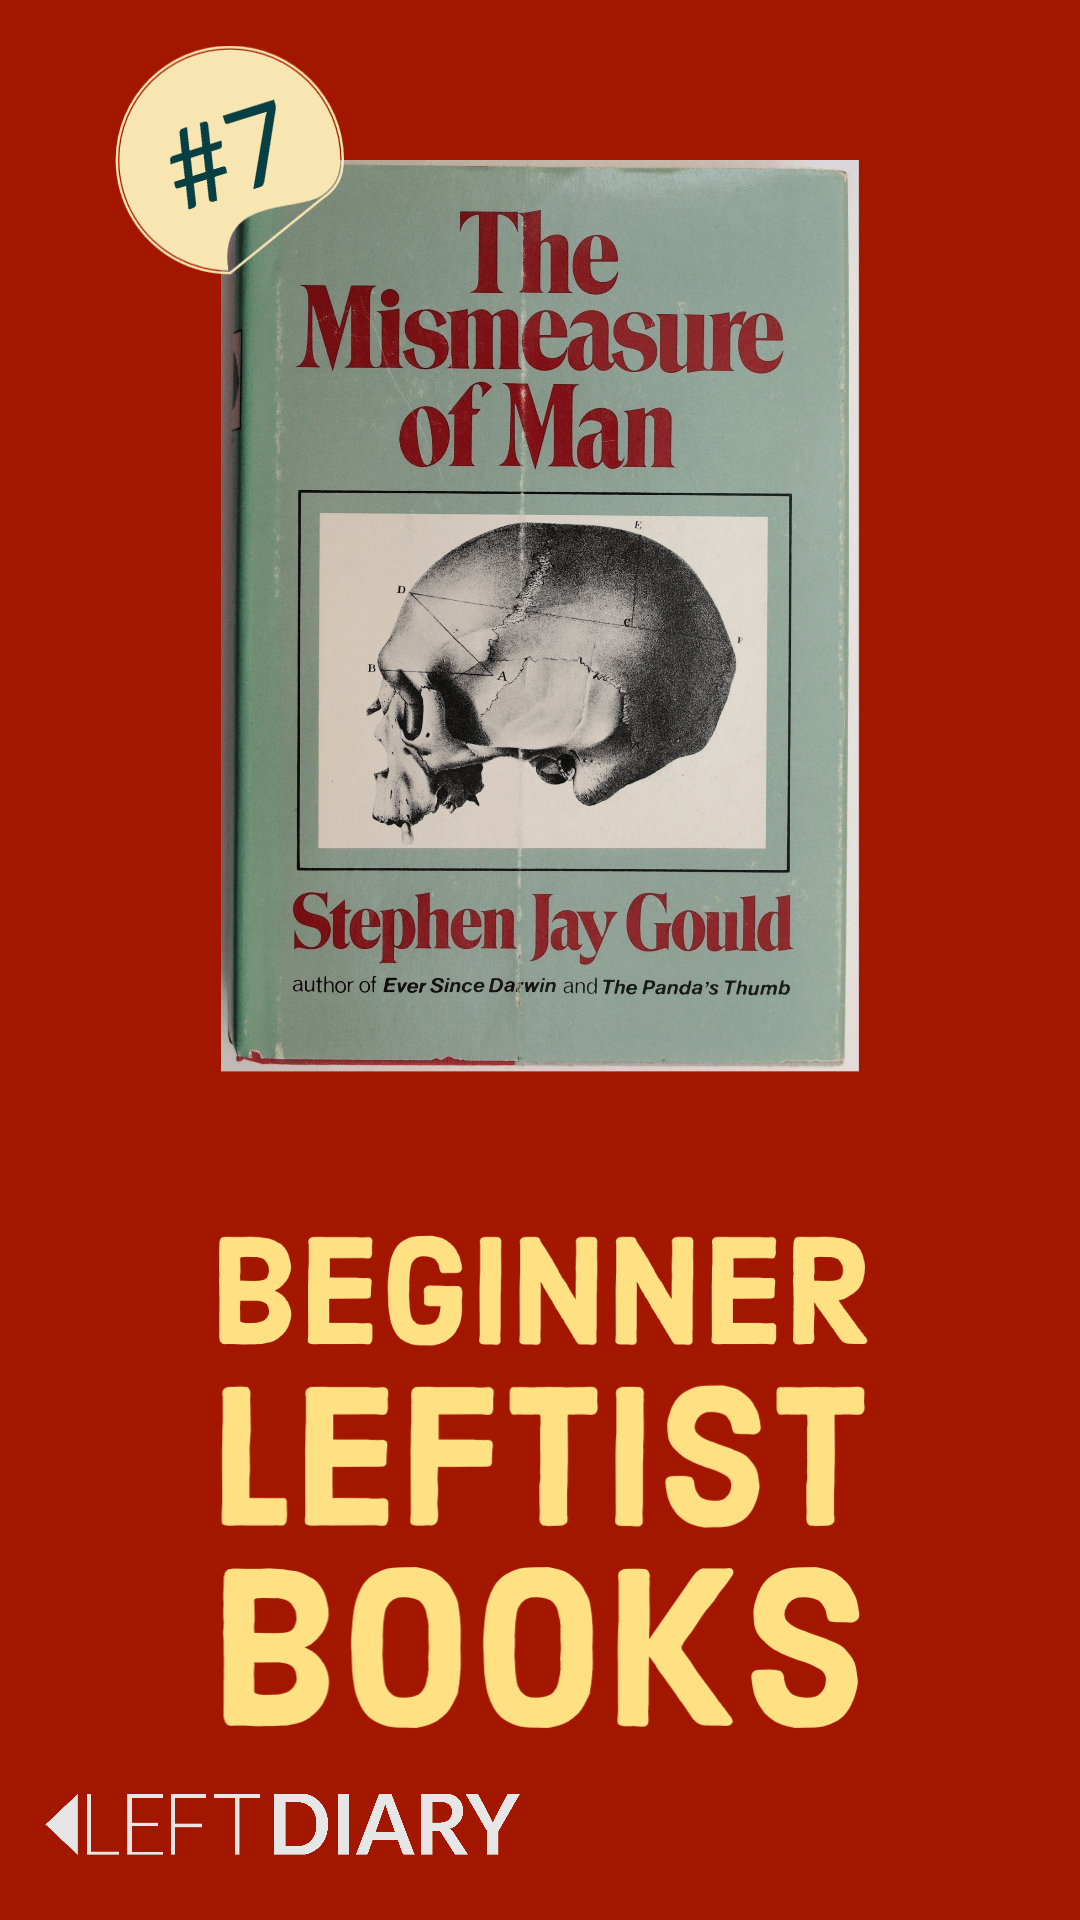 Beginner anarchist books The Mismeasure of Man – Stephen Jay Gould